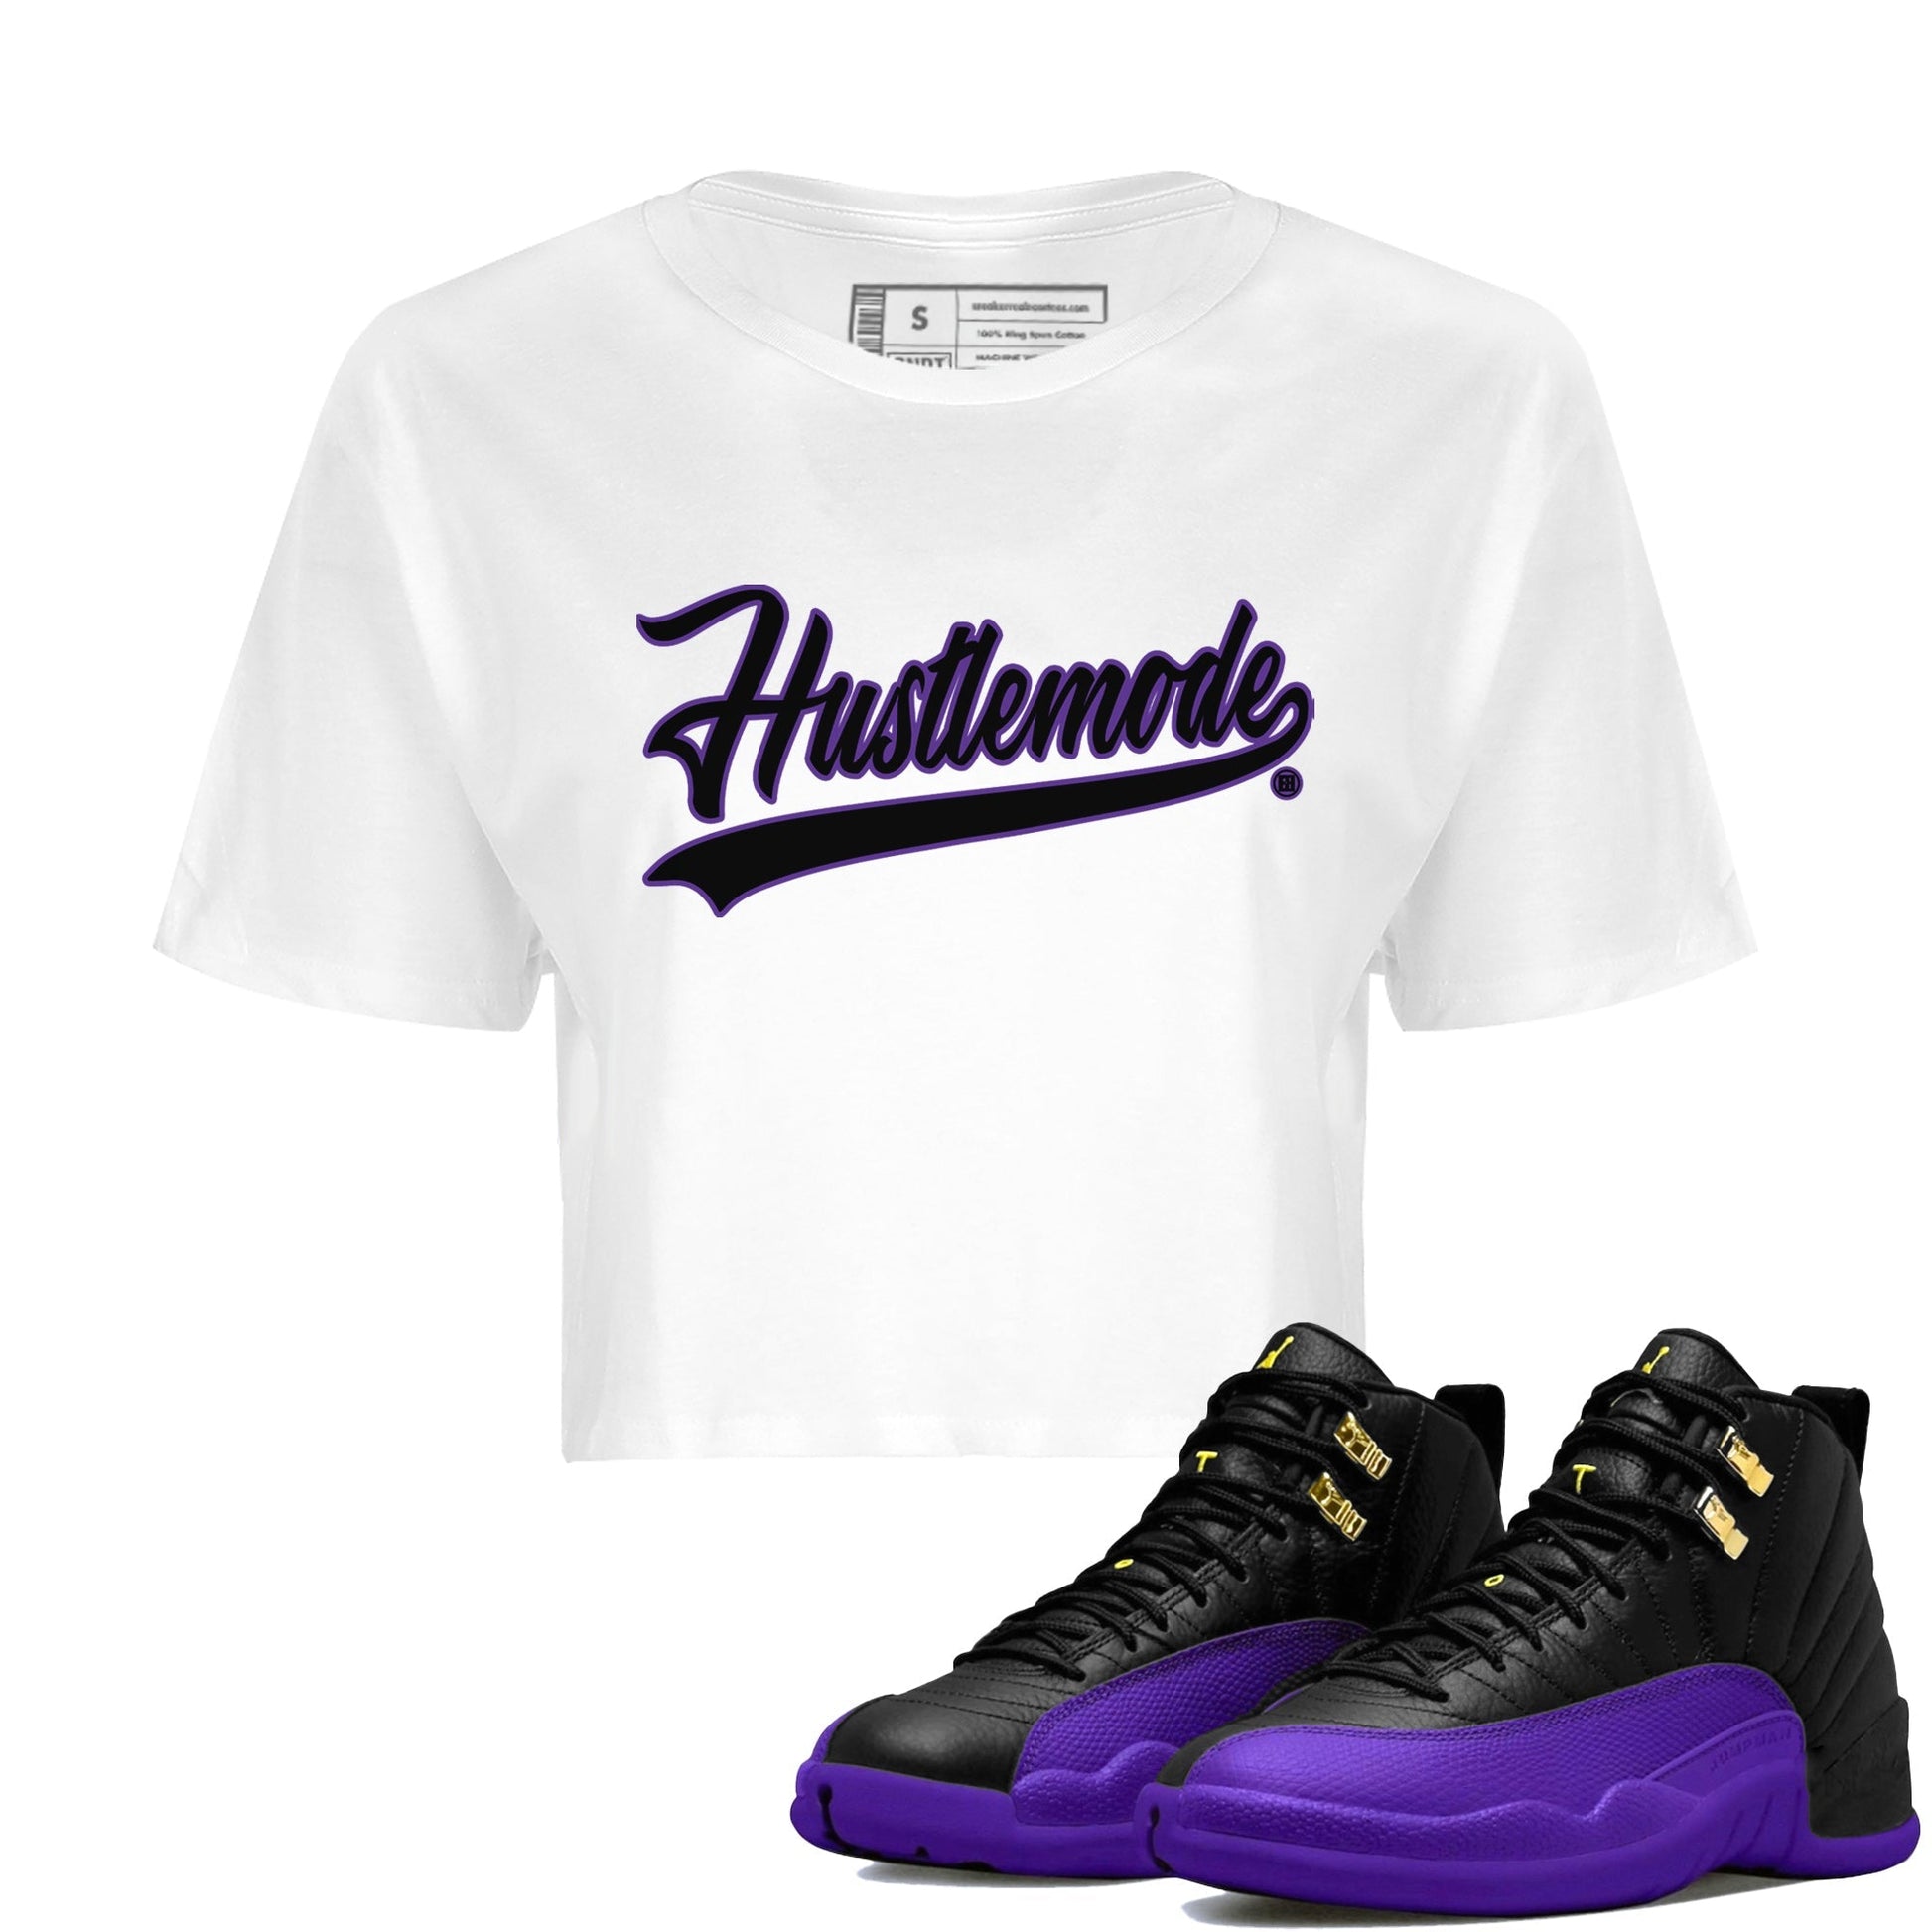 Air Jordan 12 Field Purple Sneaker Match Tees Hustle Mode Sneaker Tees Jordan 12 Field Purple Sneaker Release Tees Women's Shirts White 1